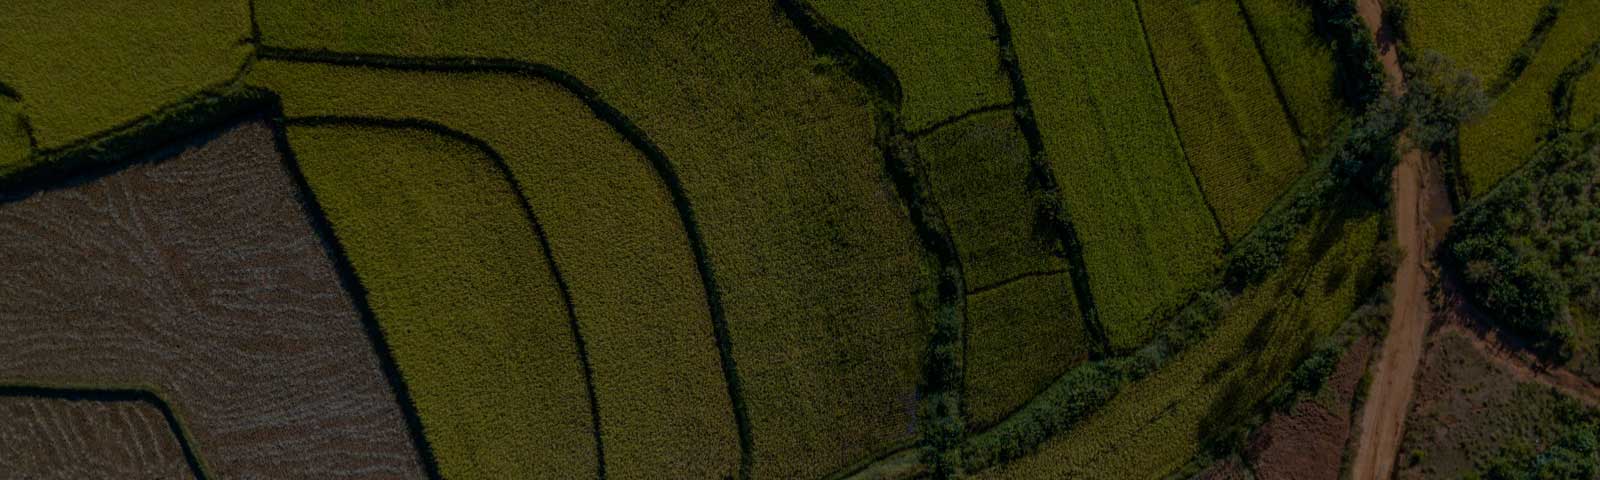 Aerial view of fields in geometric pattern